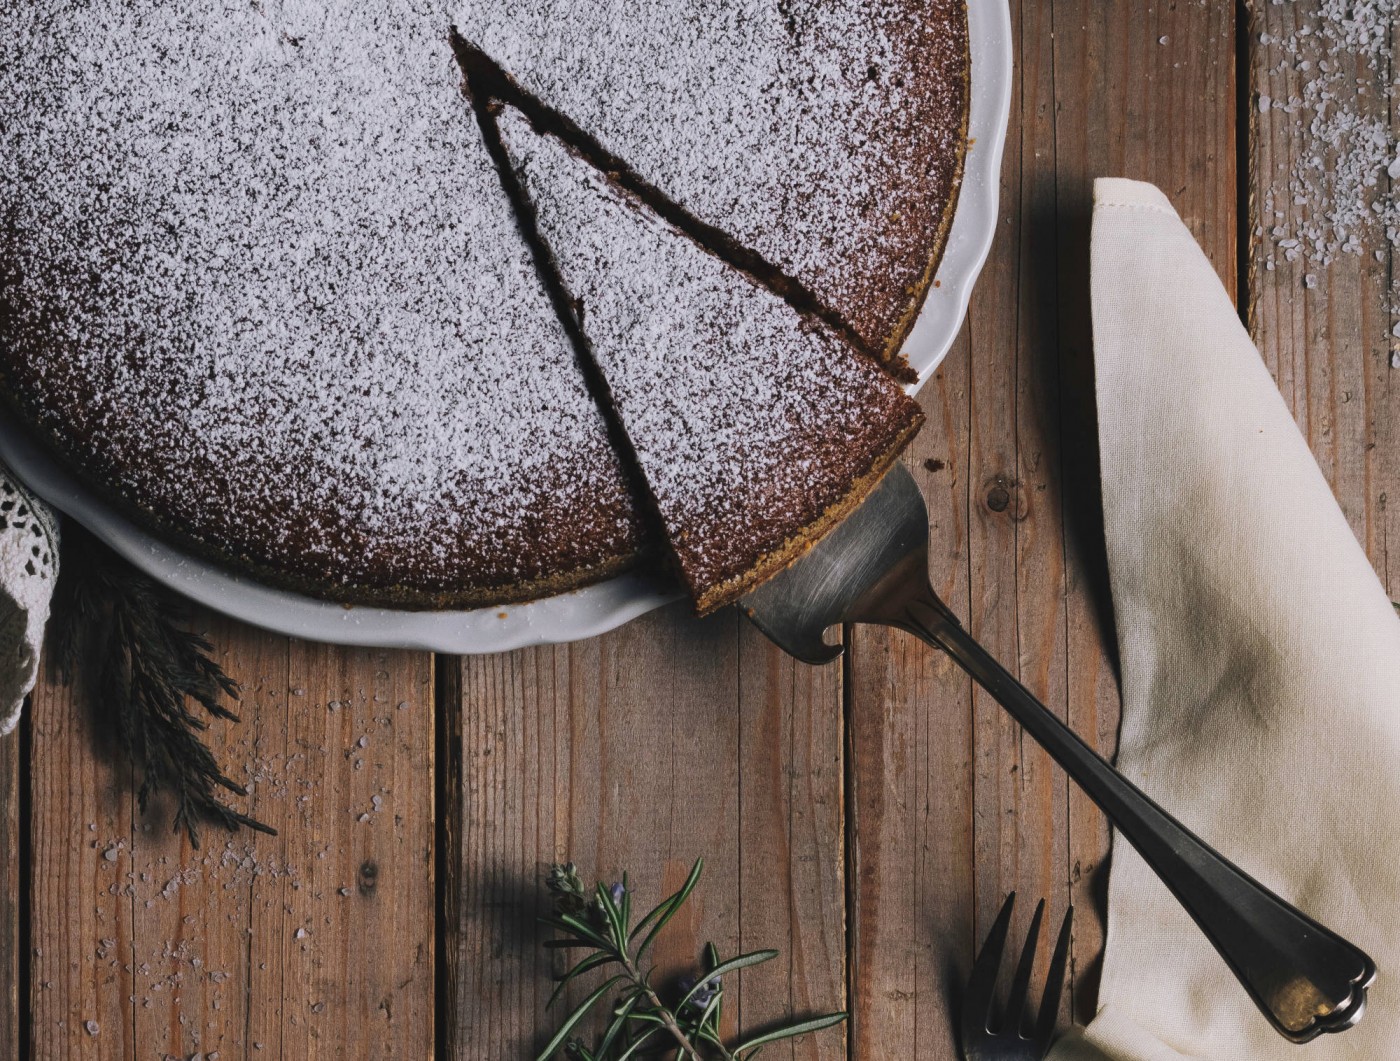 A recipe by Emanuela: the chocolate and Rosada pears cake